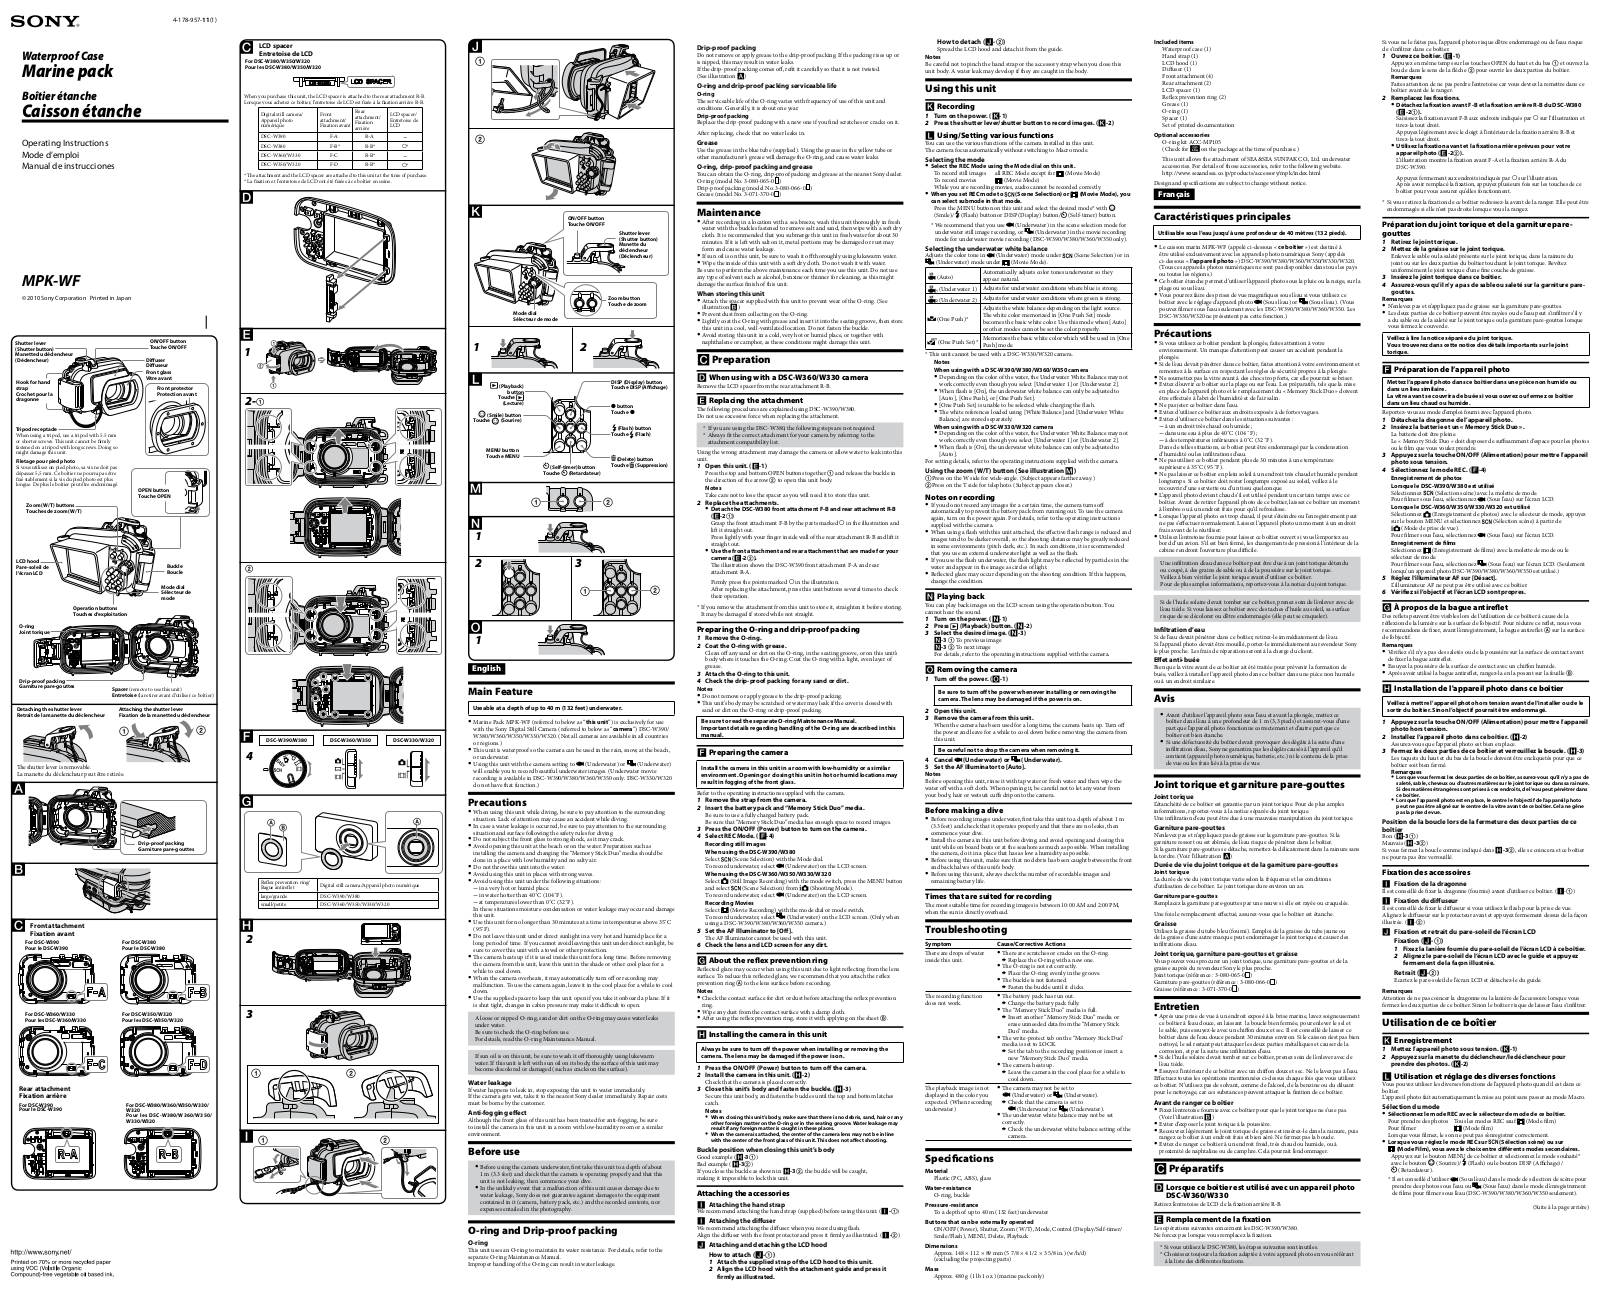 Sony MPK-WF User Manual